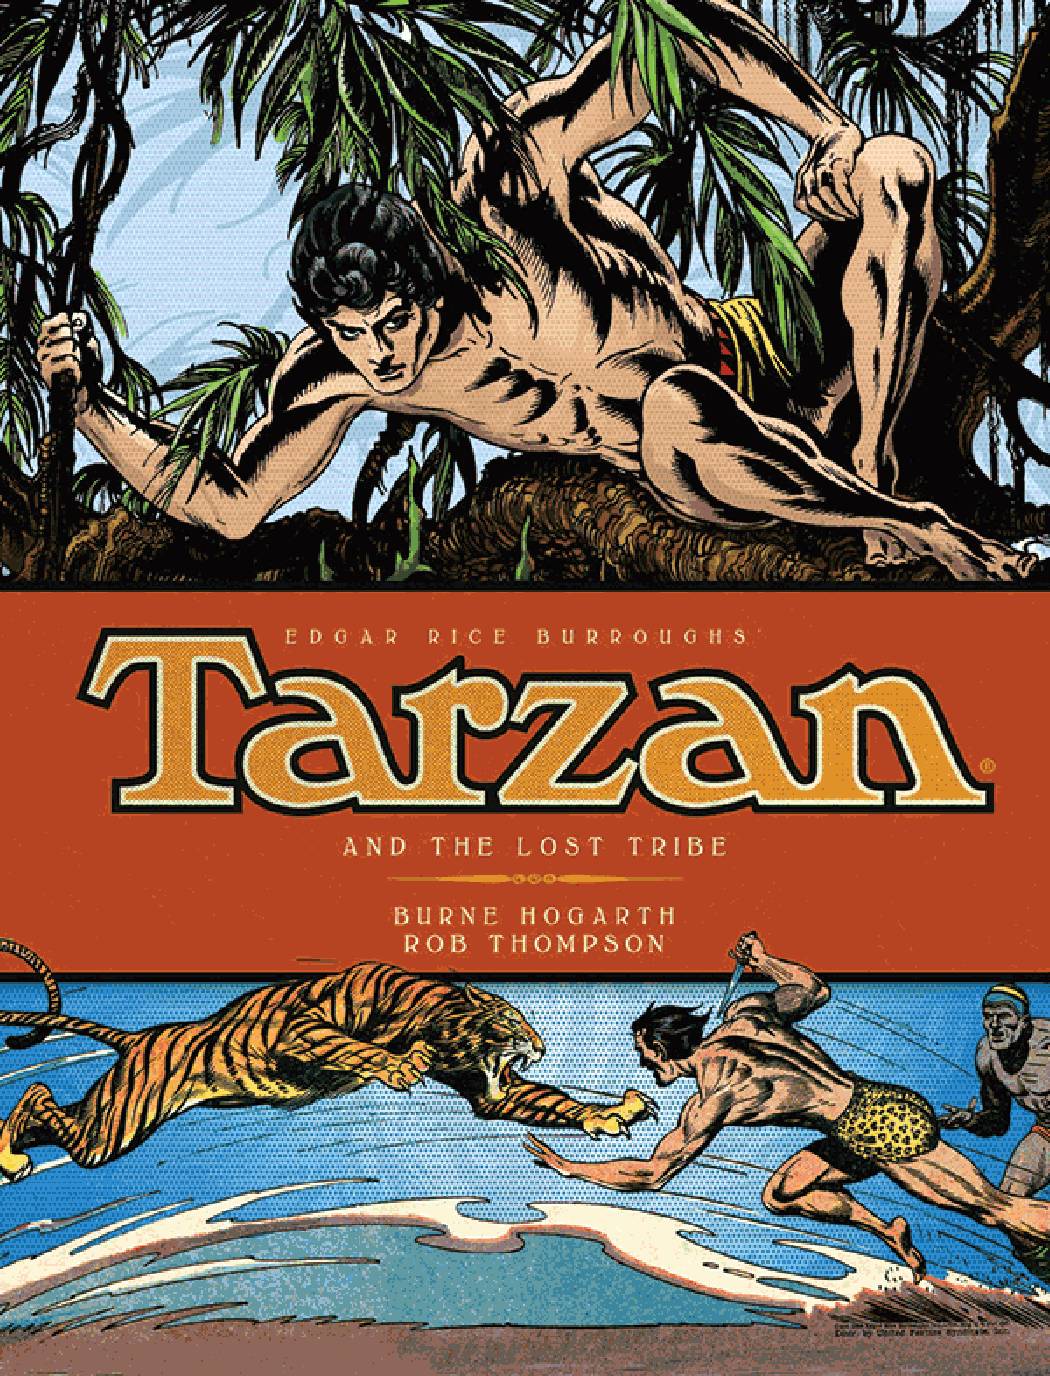 Burne Hogarth Tarzan Hardcover Graphic Novel Volume 4 The Lost Tribes